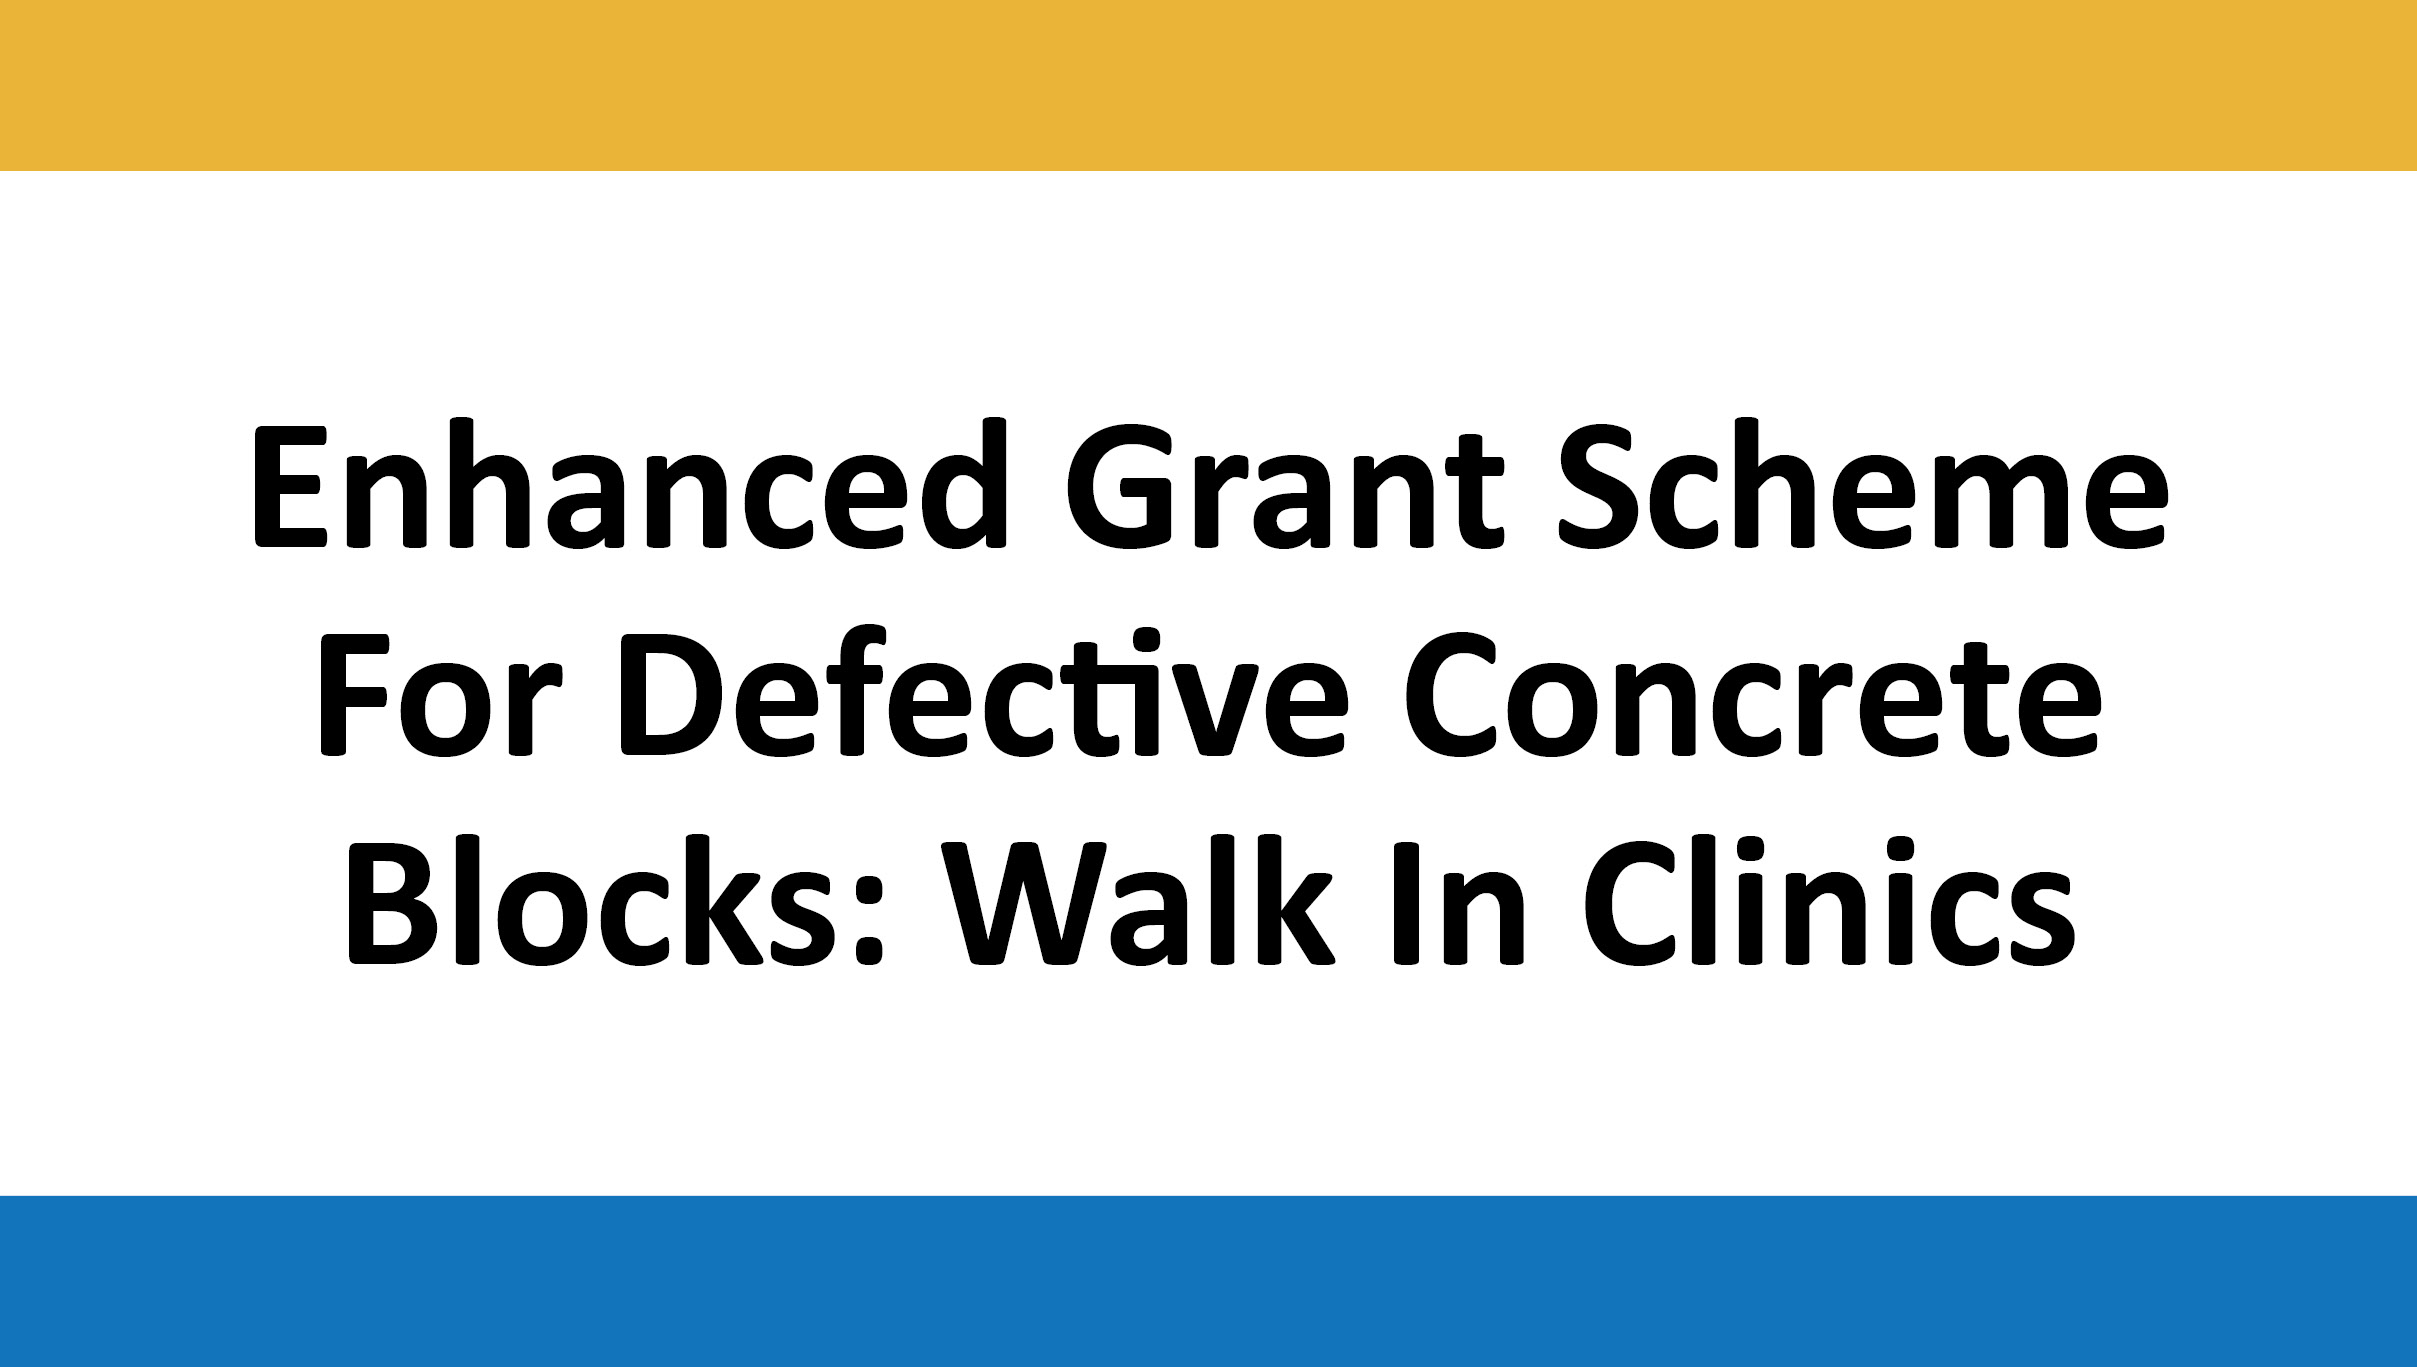 Enhanced Grant Scheme For Defective Concrete Blocks: Walk in Clinics